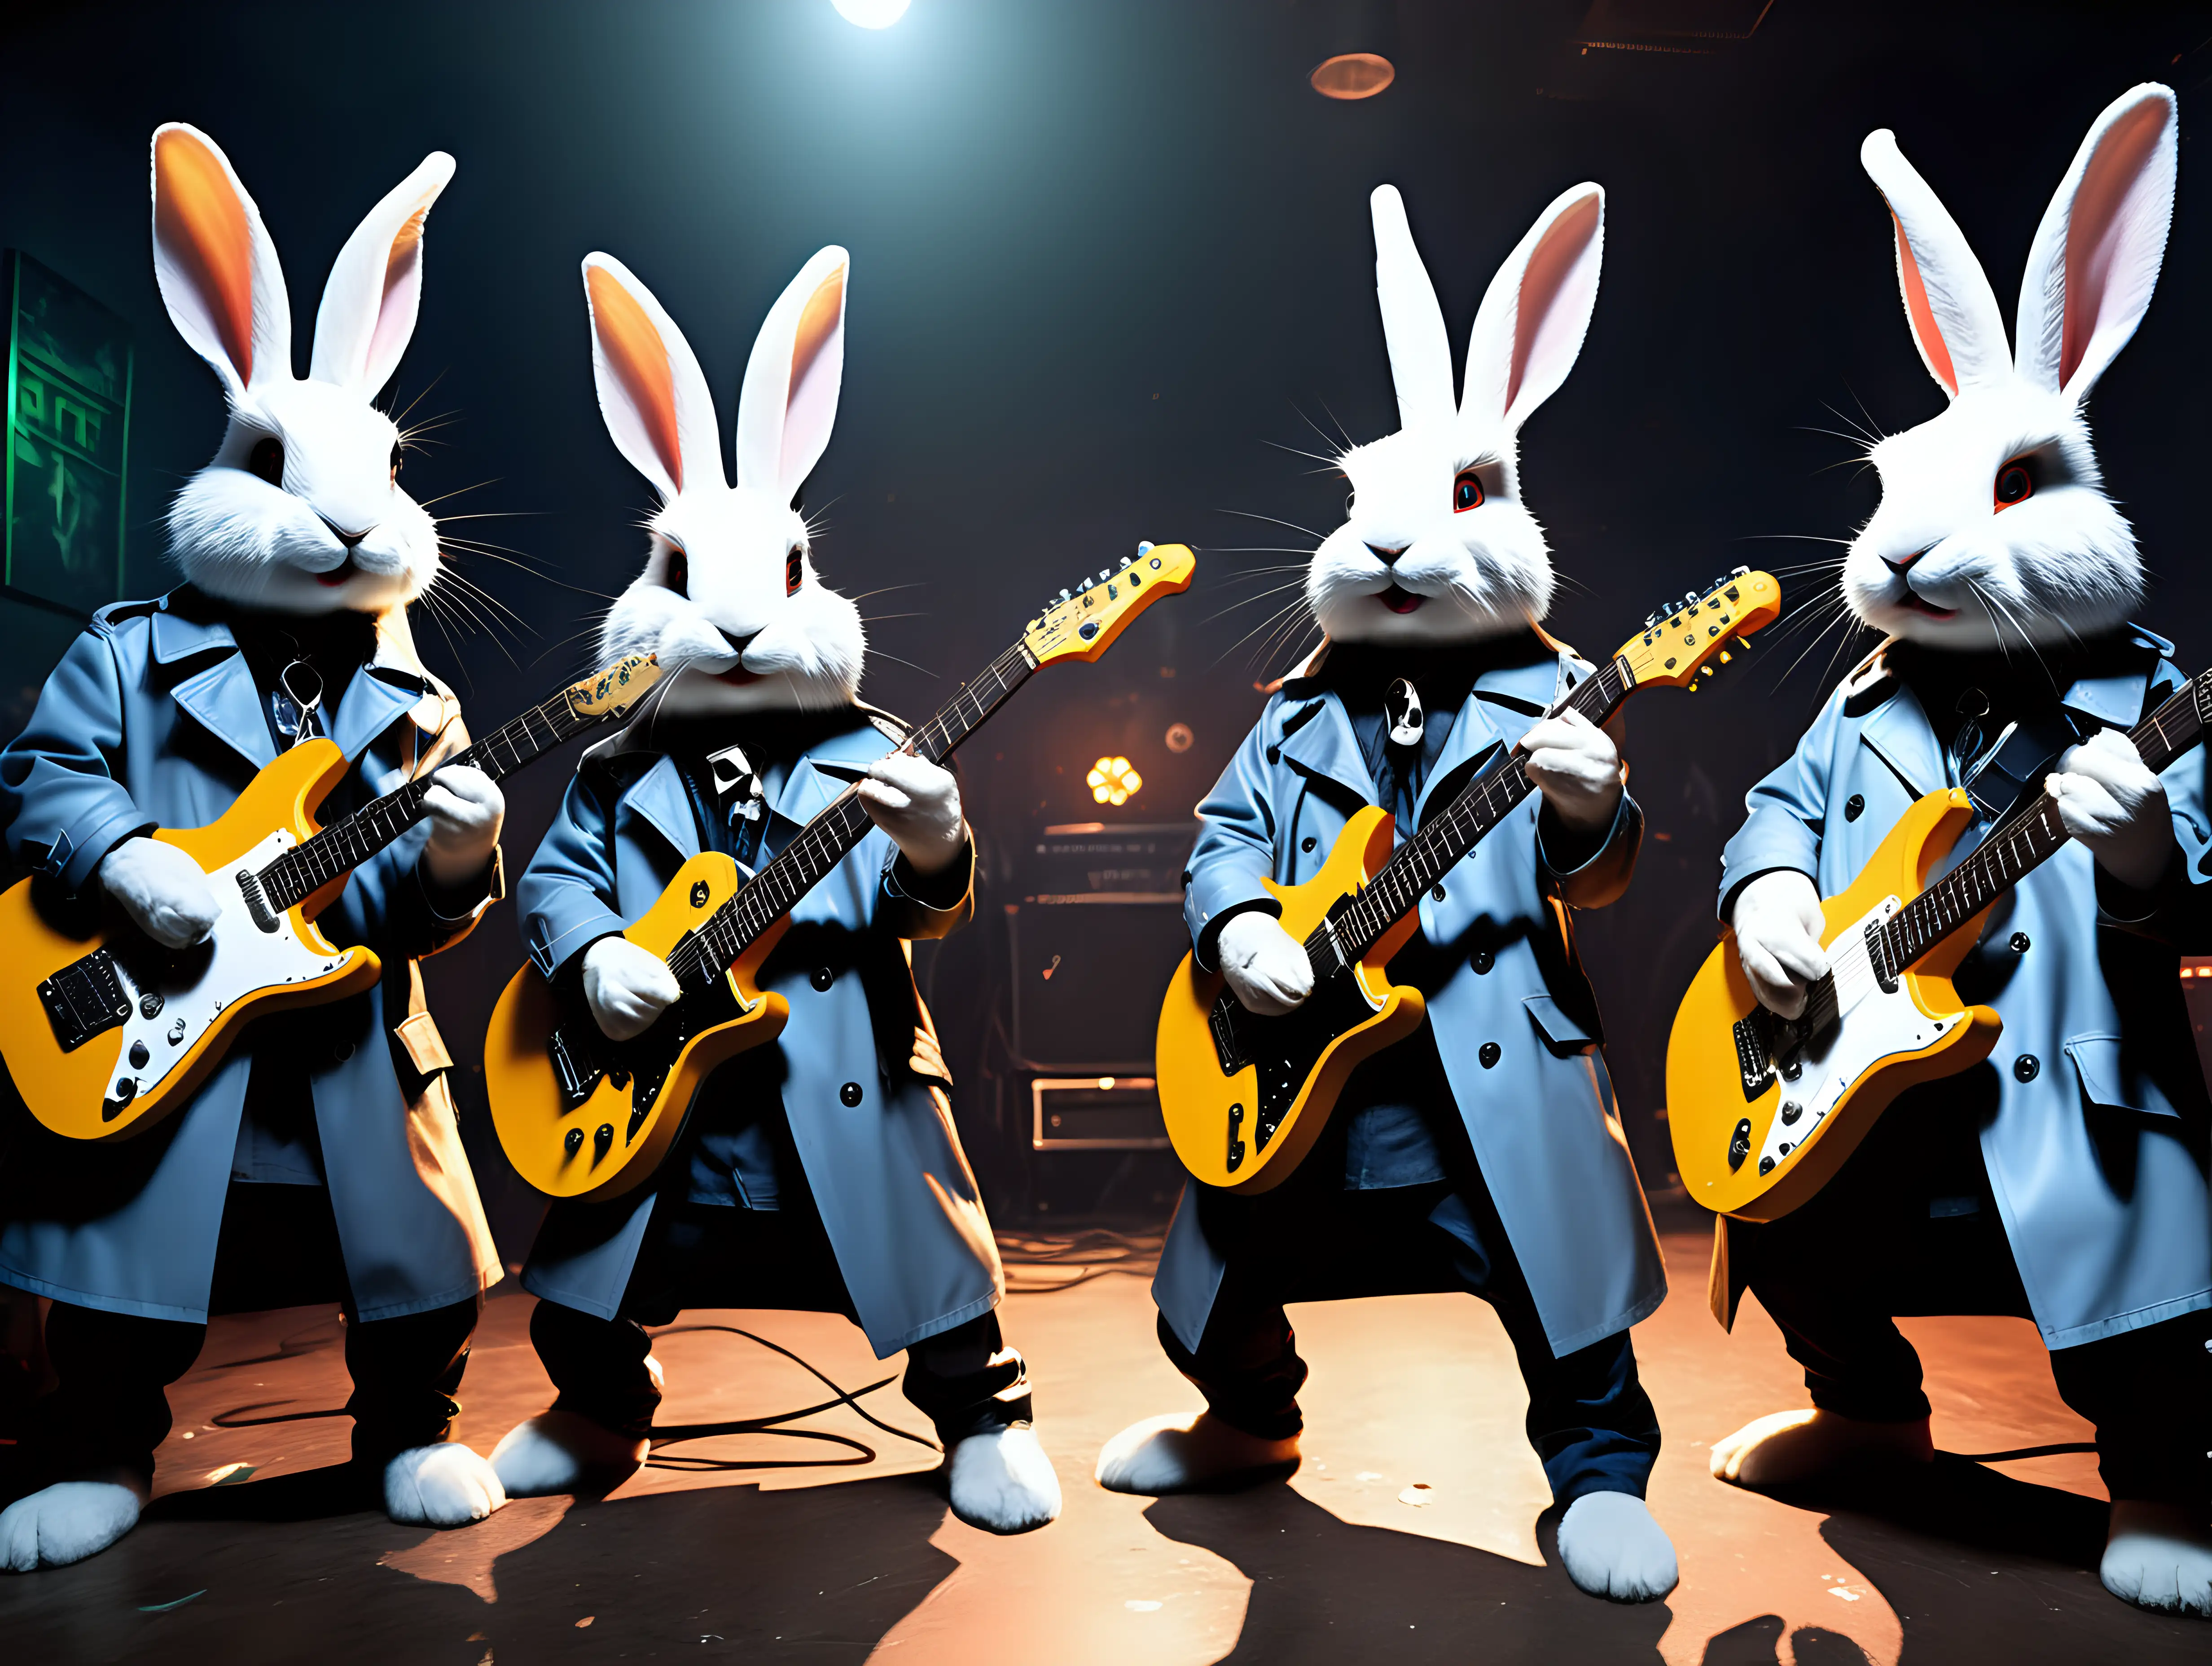 Energetic Nightclub Scene Rabbits Rocking Heavy Metal Guitars in Trench Coats